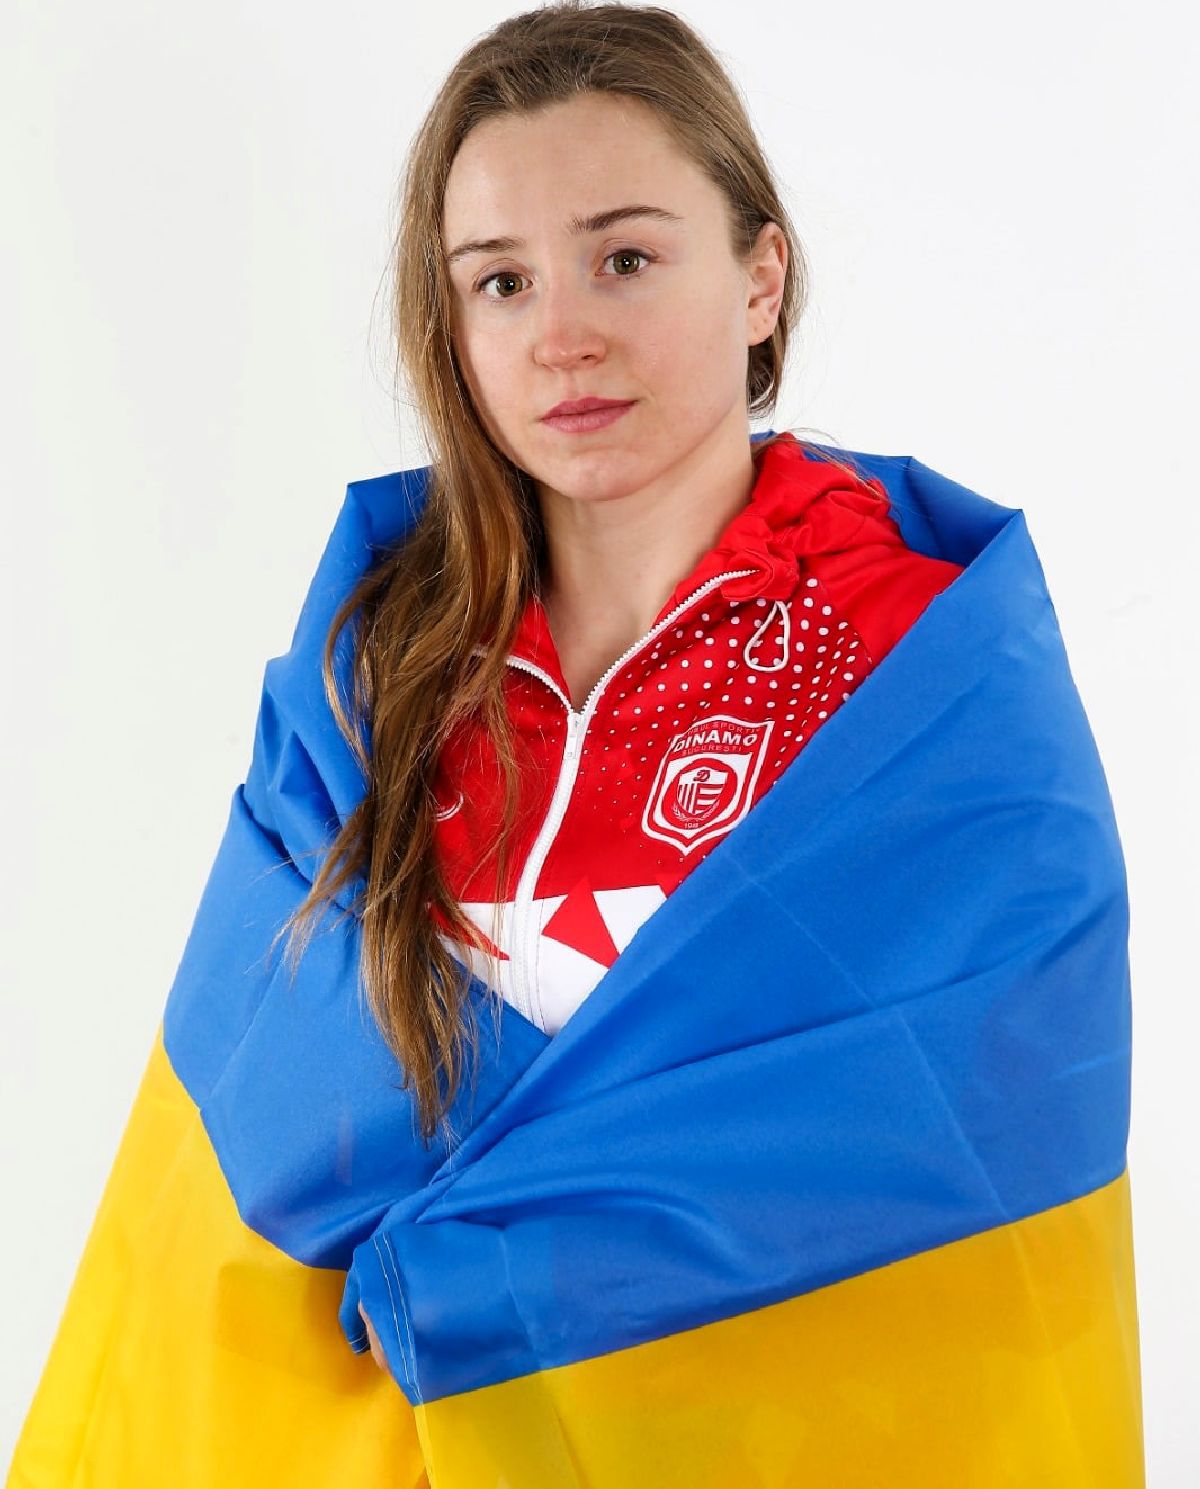 Dramă pentru Anastasia Melnychuk, poloista din naționala României: tatăl ei a murit pe front, în Ucraina